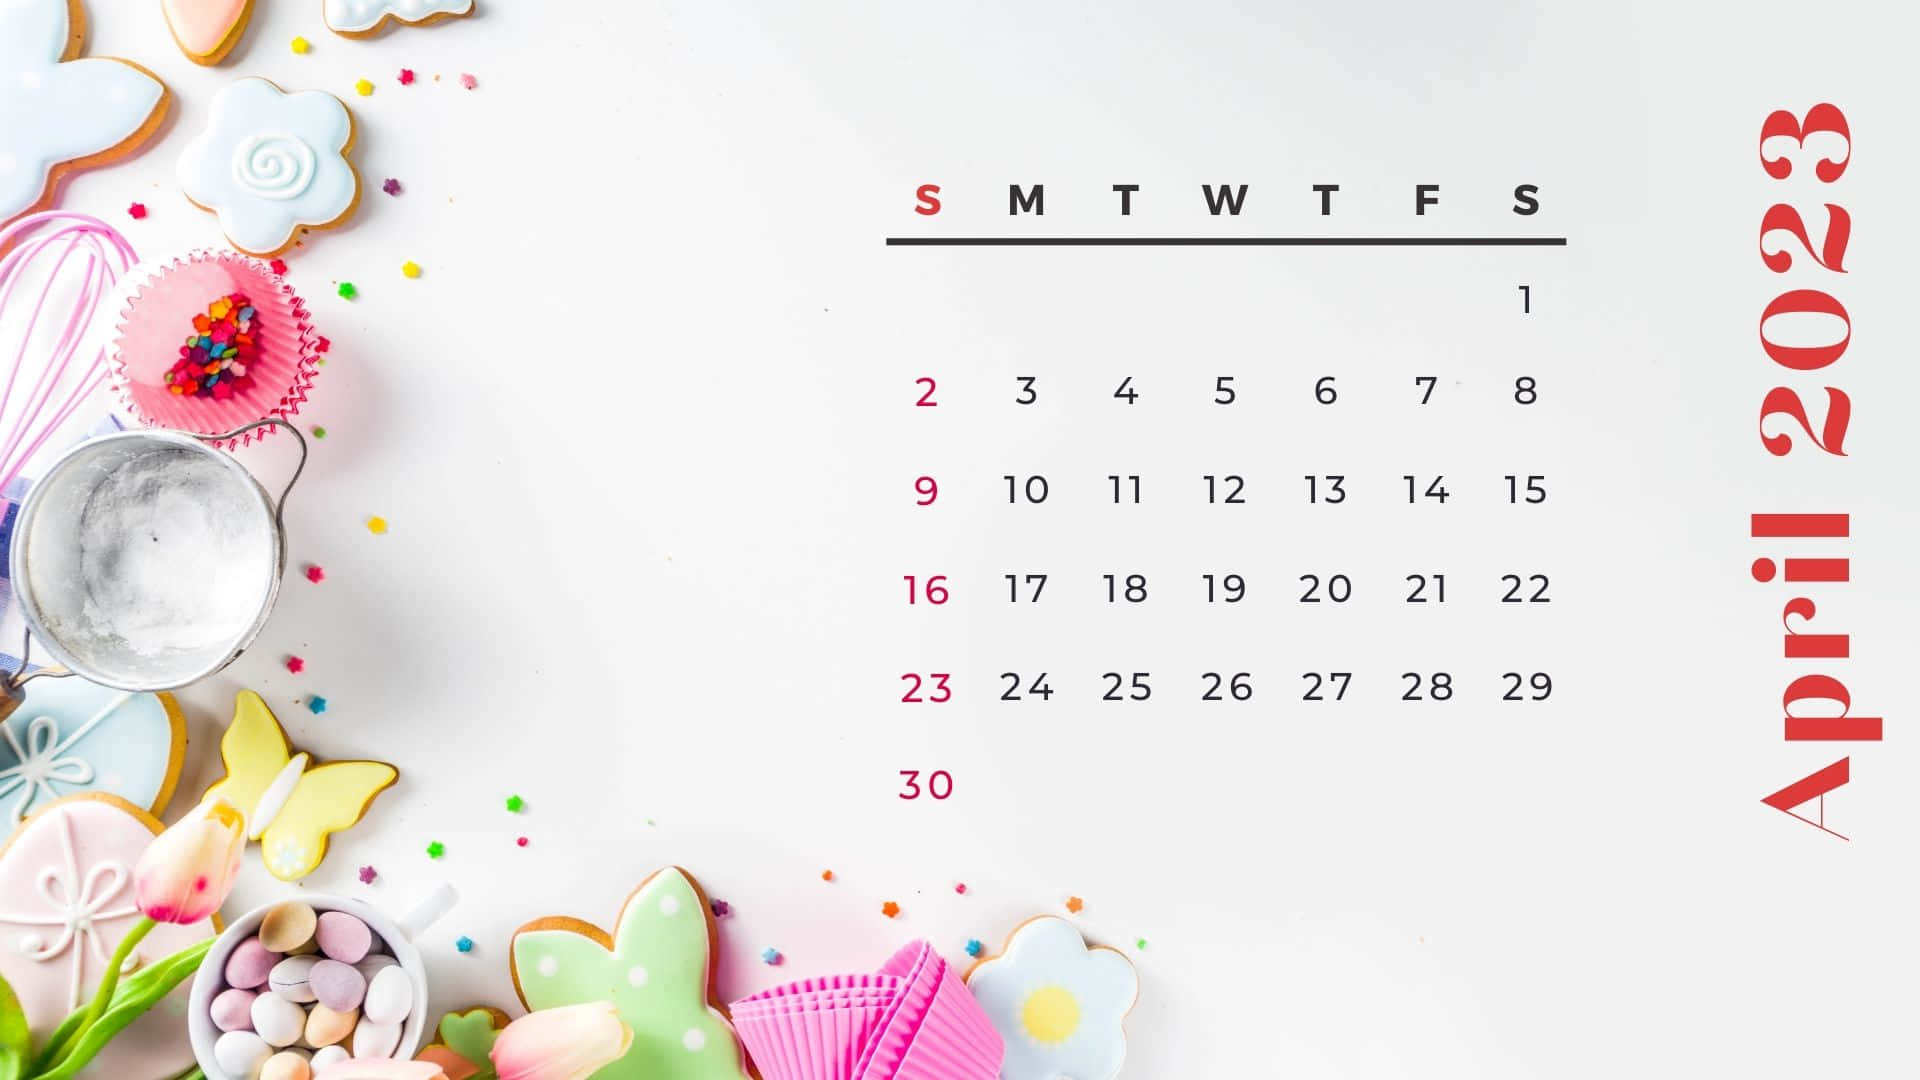 April 2016 free calendar wallpaper  desktop background